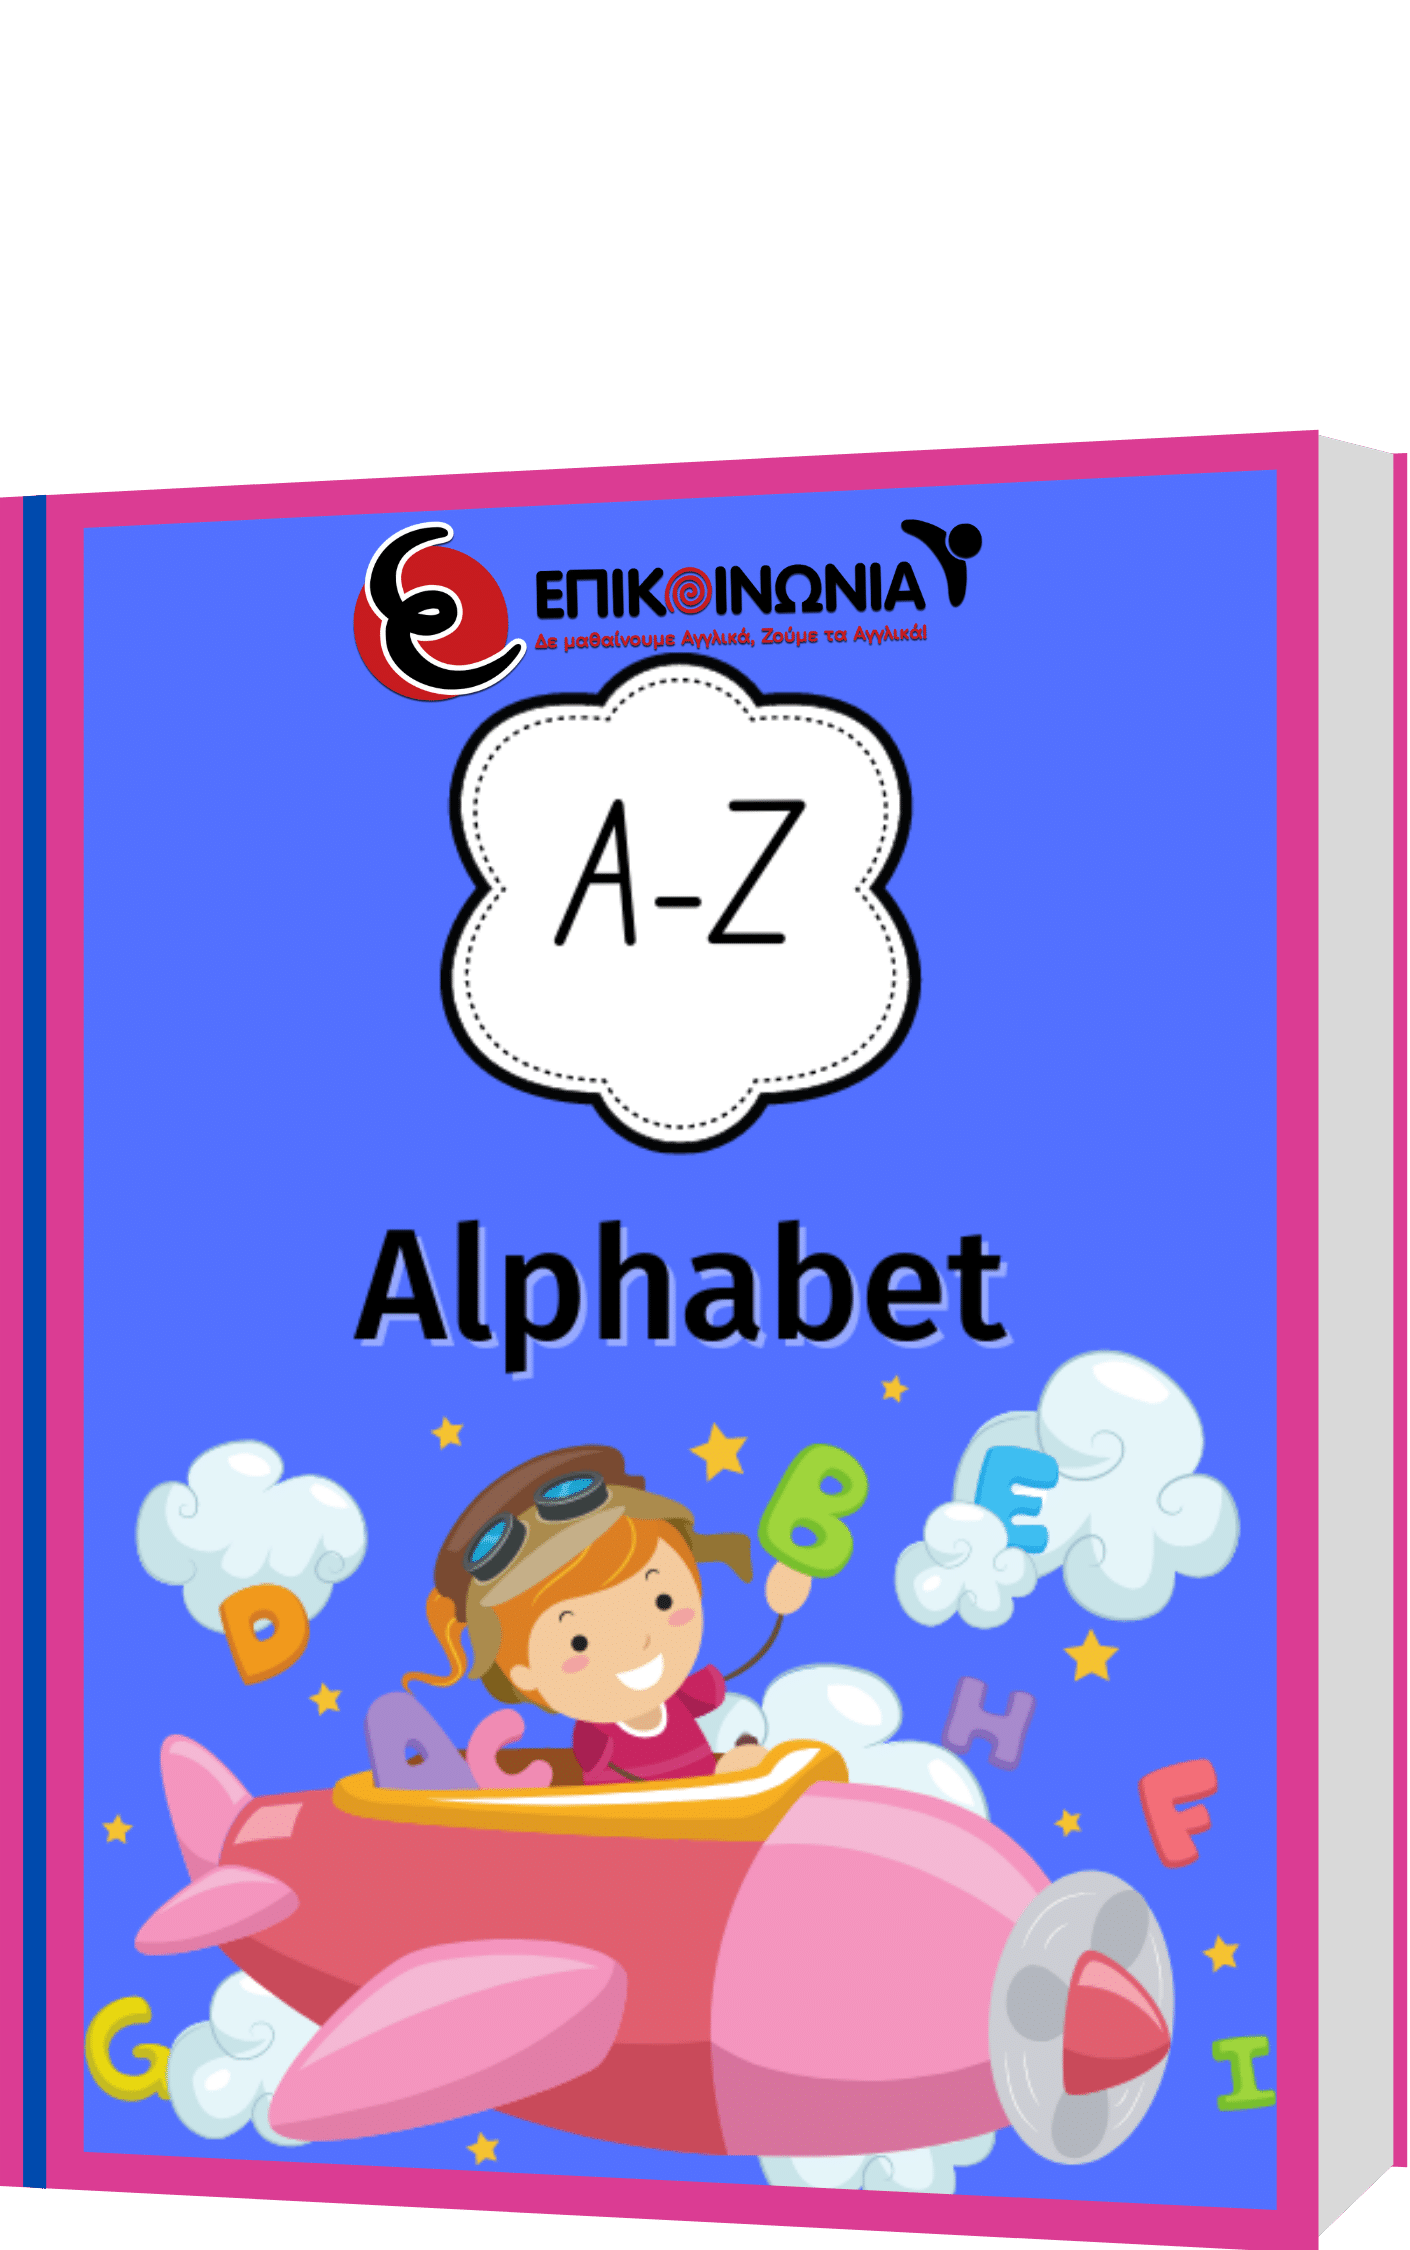 Alphabet for Kids